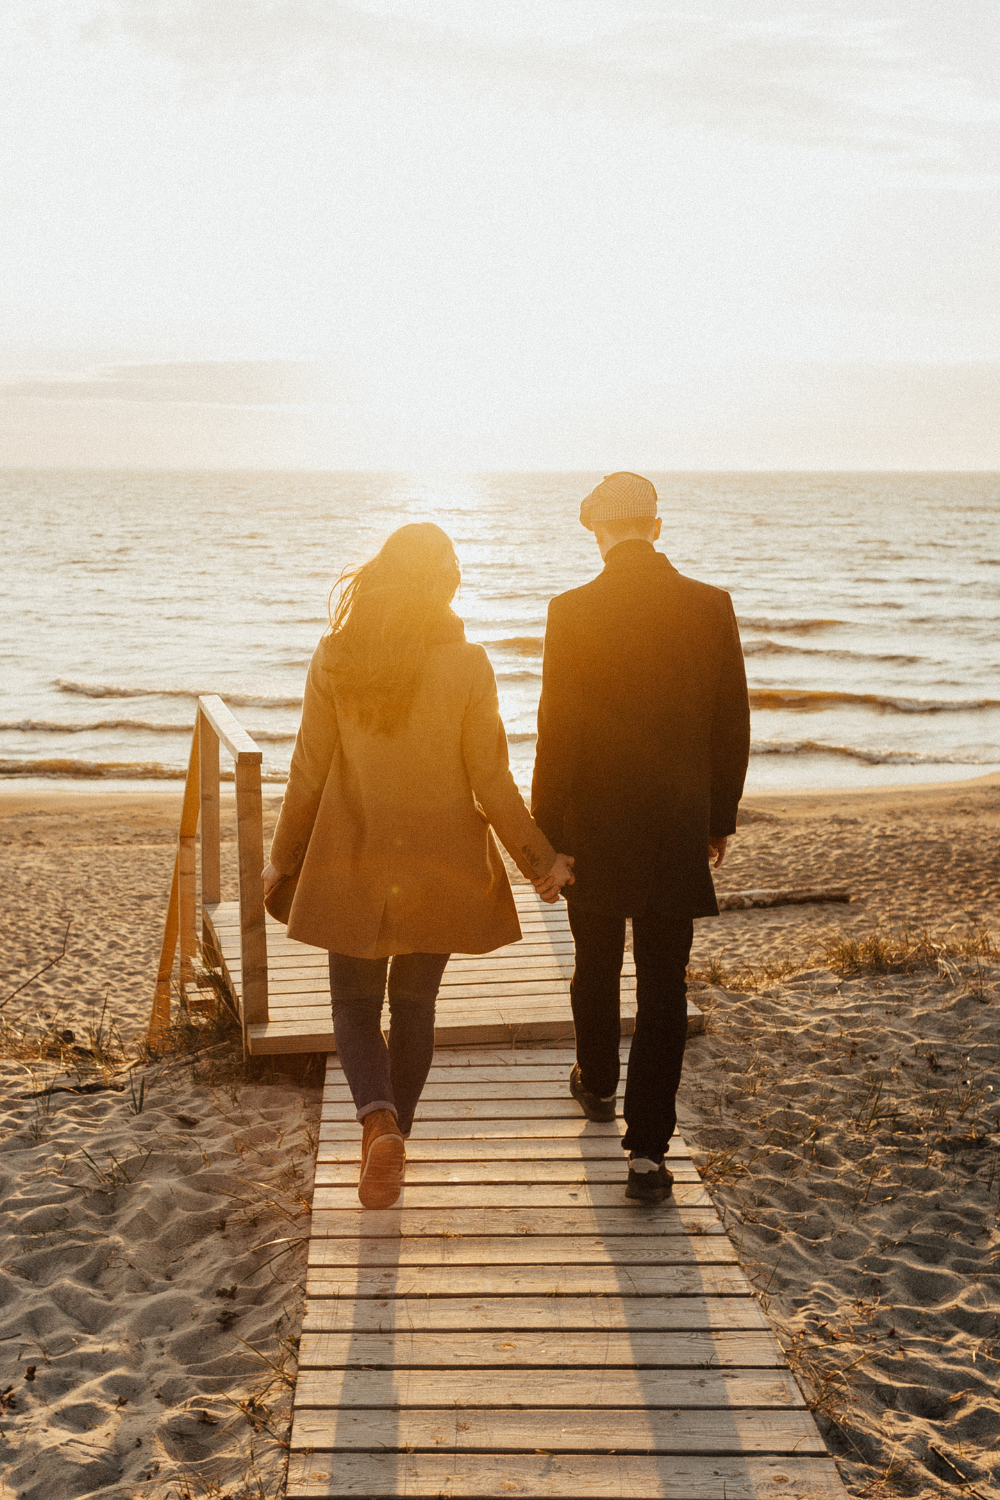 A man and woman walk down a boardwalk, holding hands.